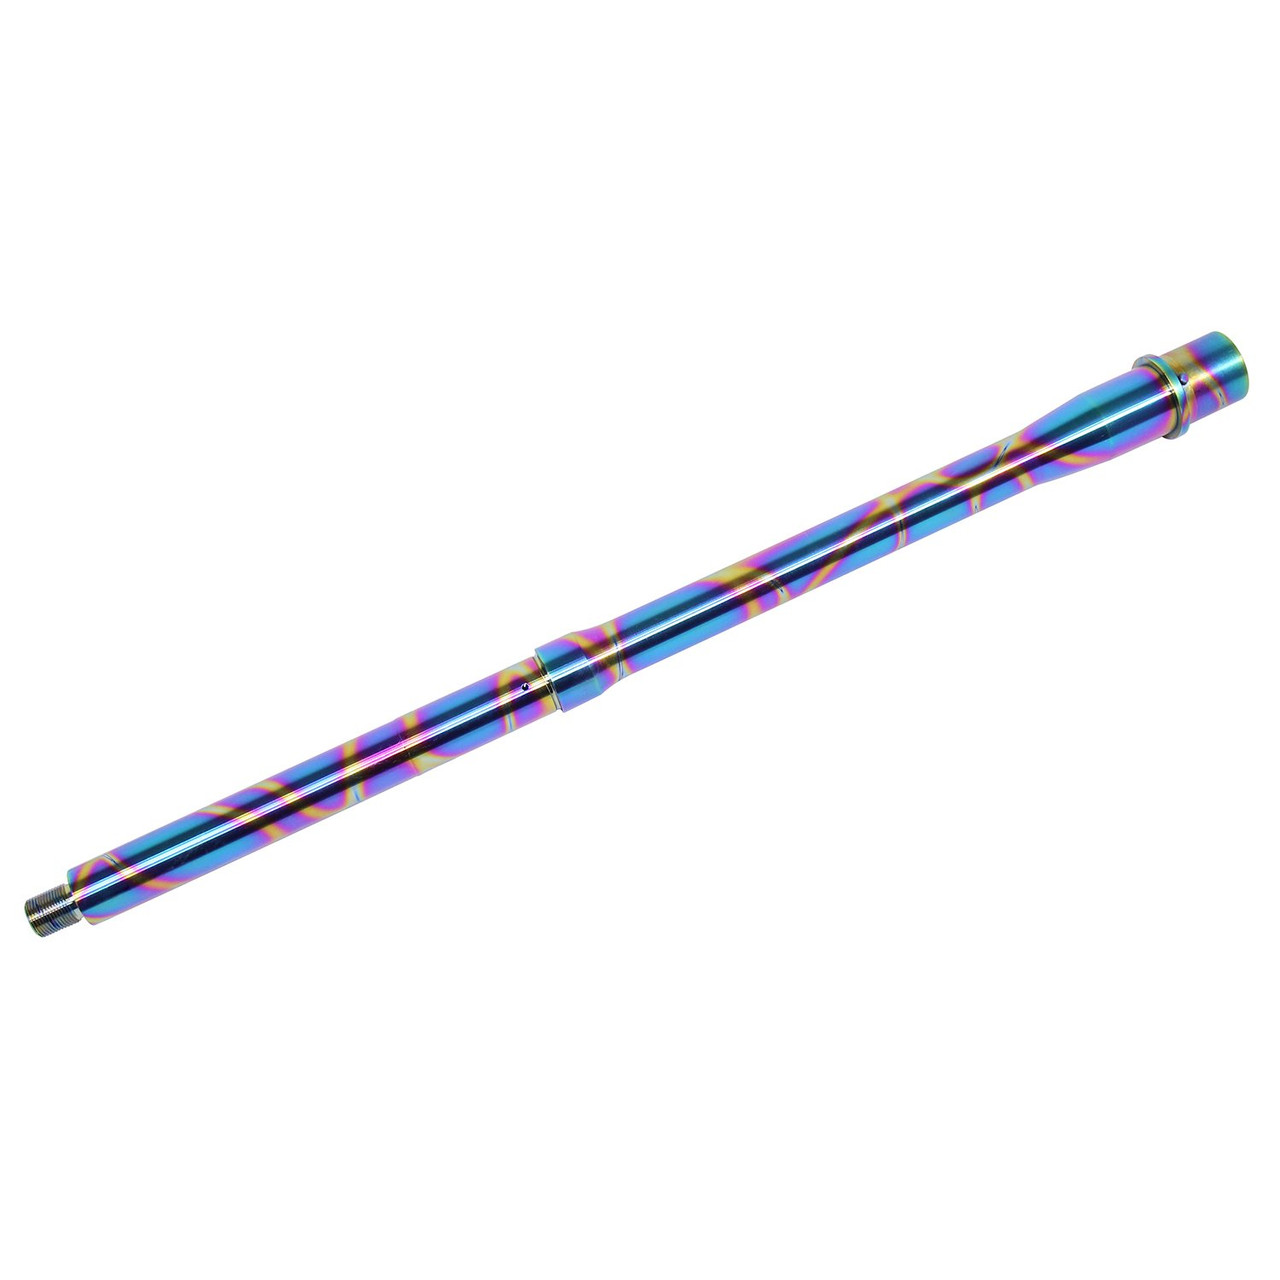 Guntec USA BAR-16-RPVD-TD 16" 5.56mm 1:7 Twist M4 4150 Barrel (Rainbow PVD Coated) (Tie Dye Pattern)